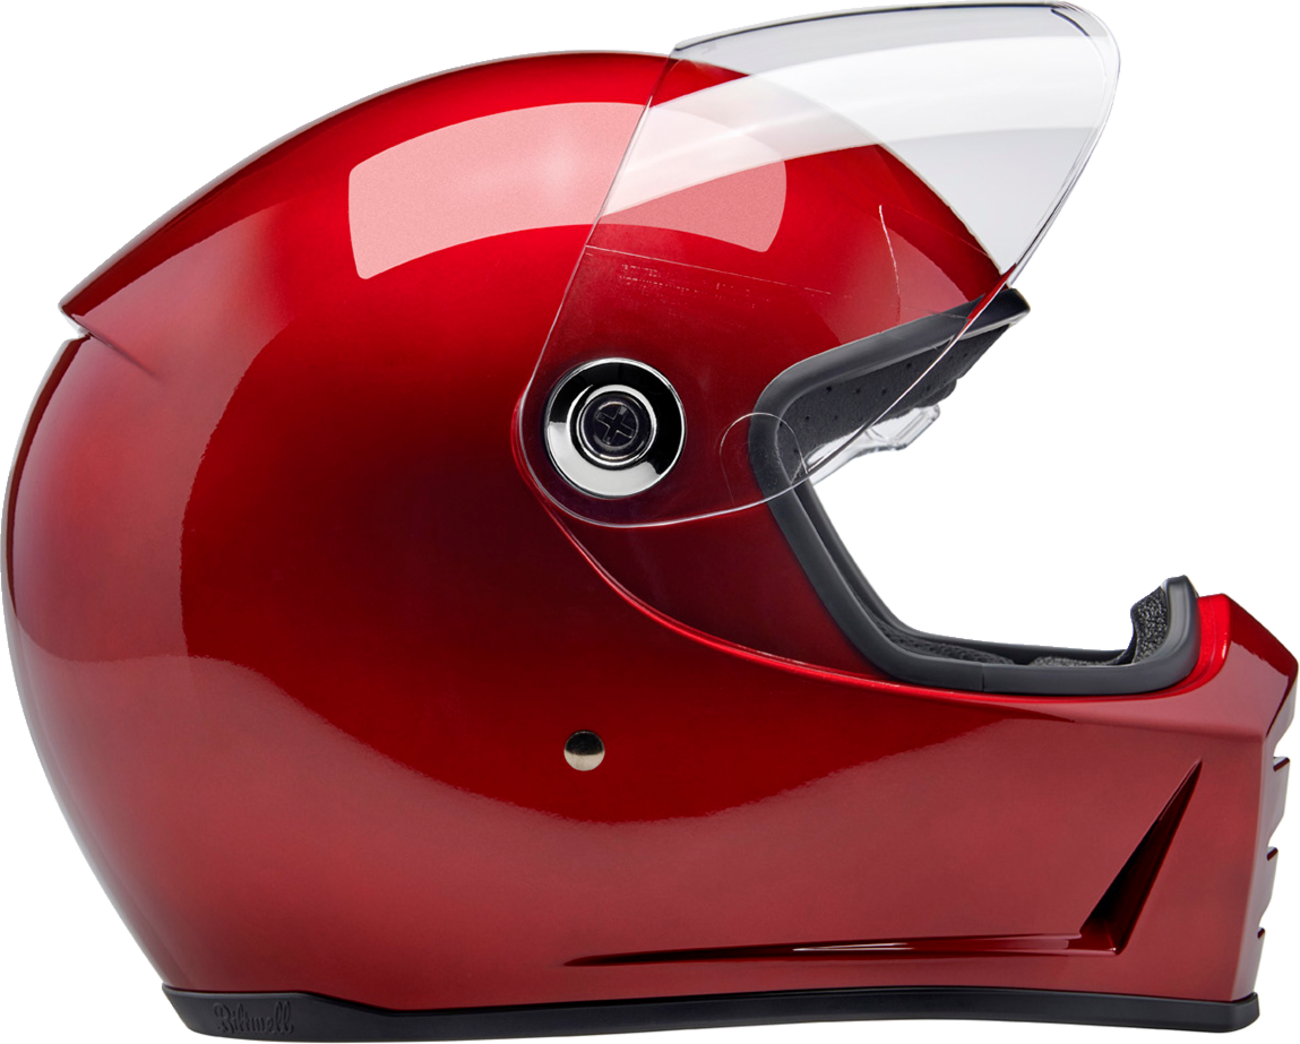 BILTWELL Lane Splitter Helmet - Metallic Cherry Red - Medium 1004-351-503